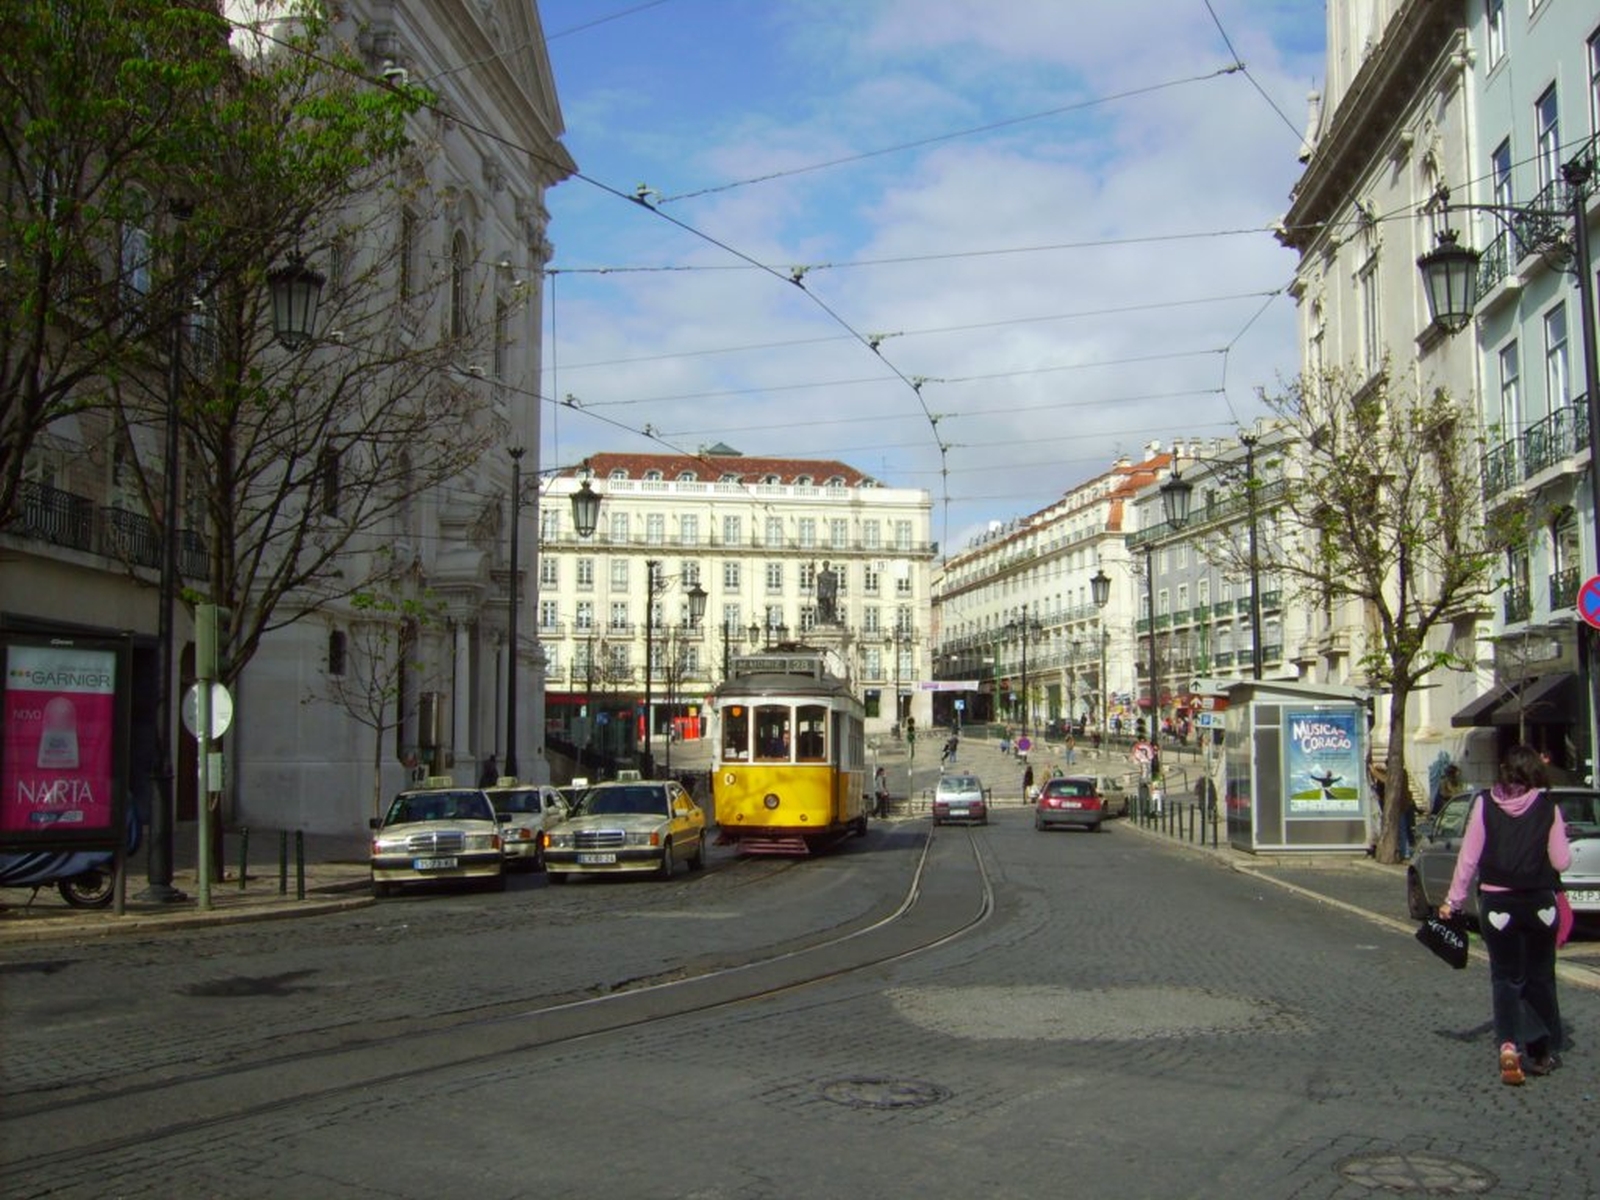 006 - Lisbona